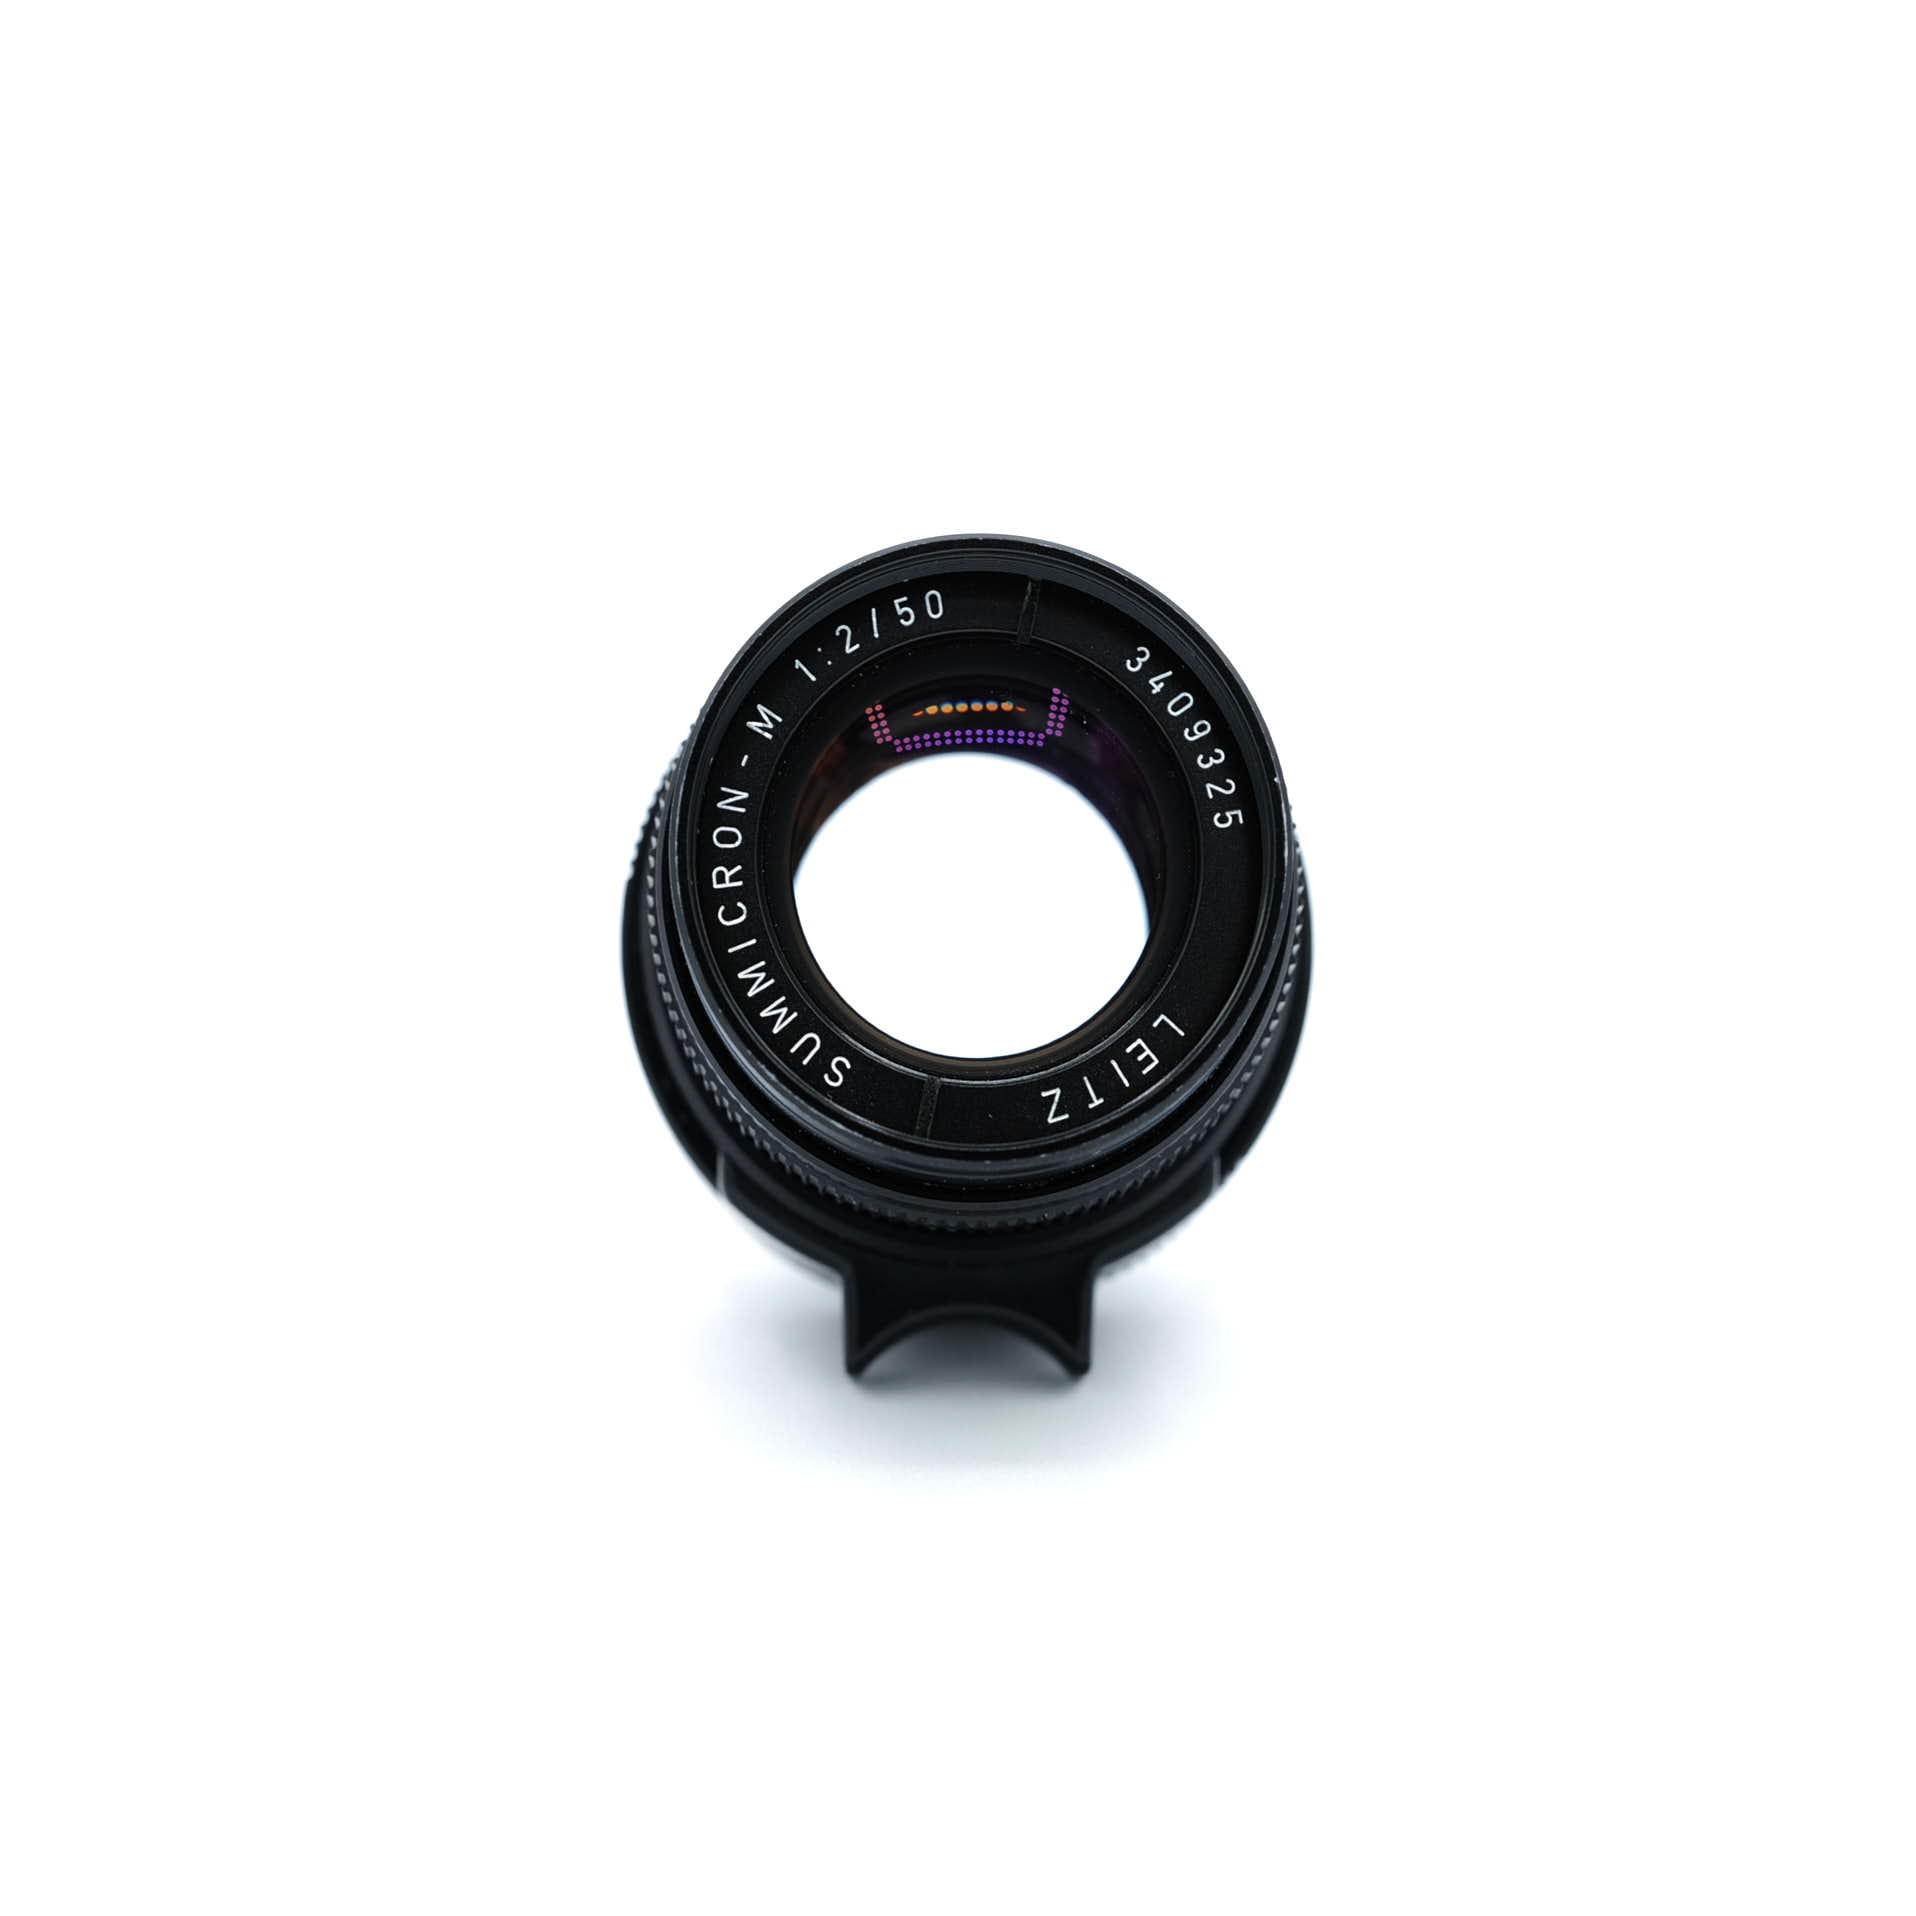 Leica Summicron-M f/2 50mm